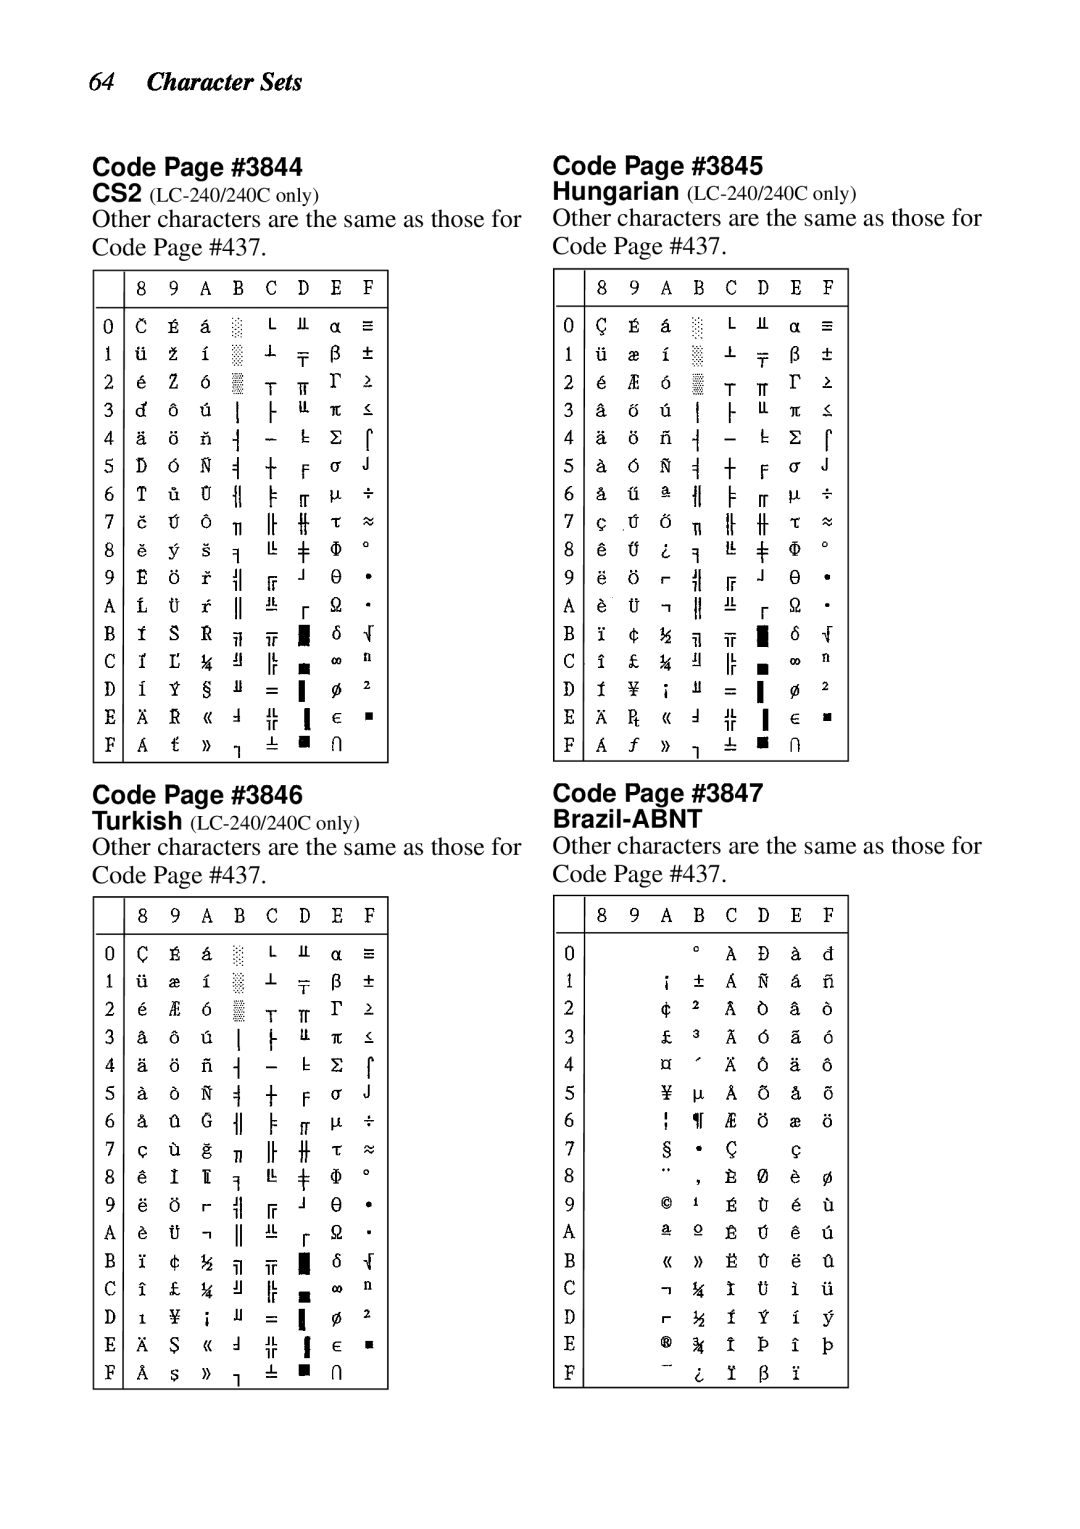 Star Micronics NX-2460 Character Sets, Code Page #3844, Code Page #3846, Code Page #3845, Code Page #3847 Brazil-ABNT 